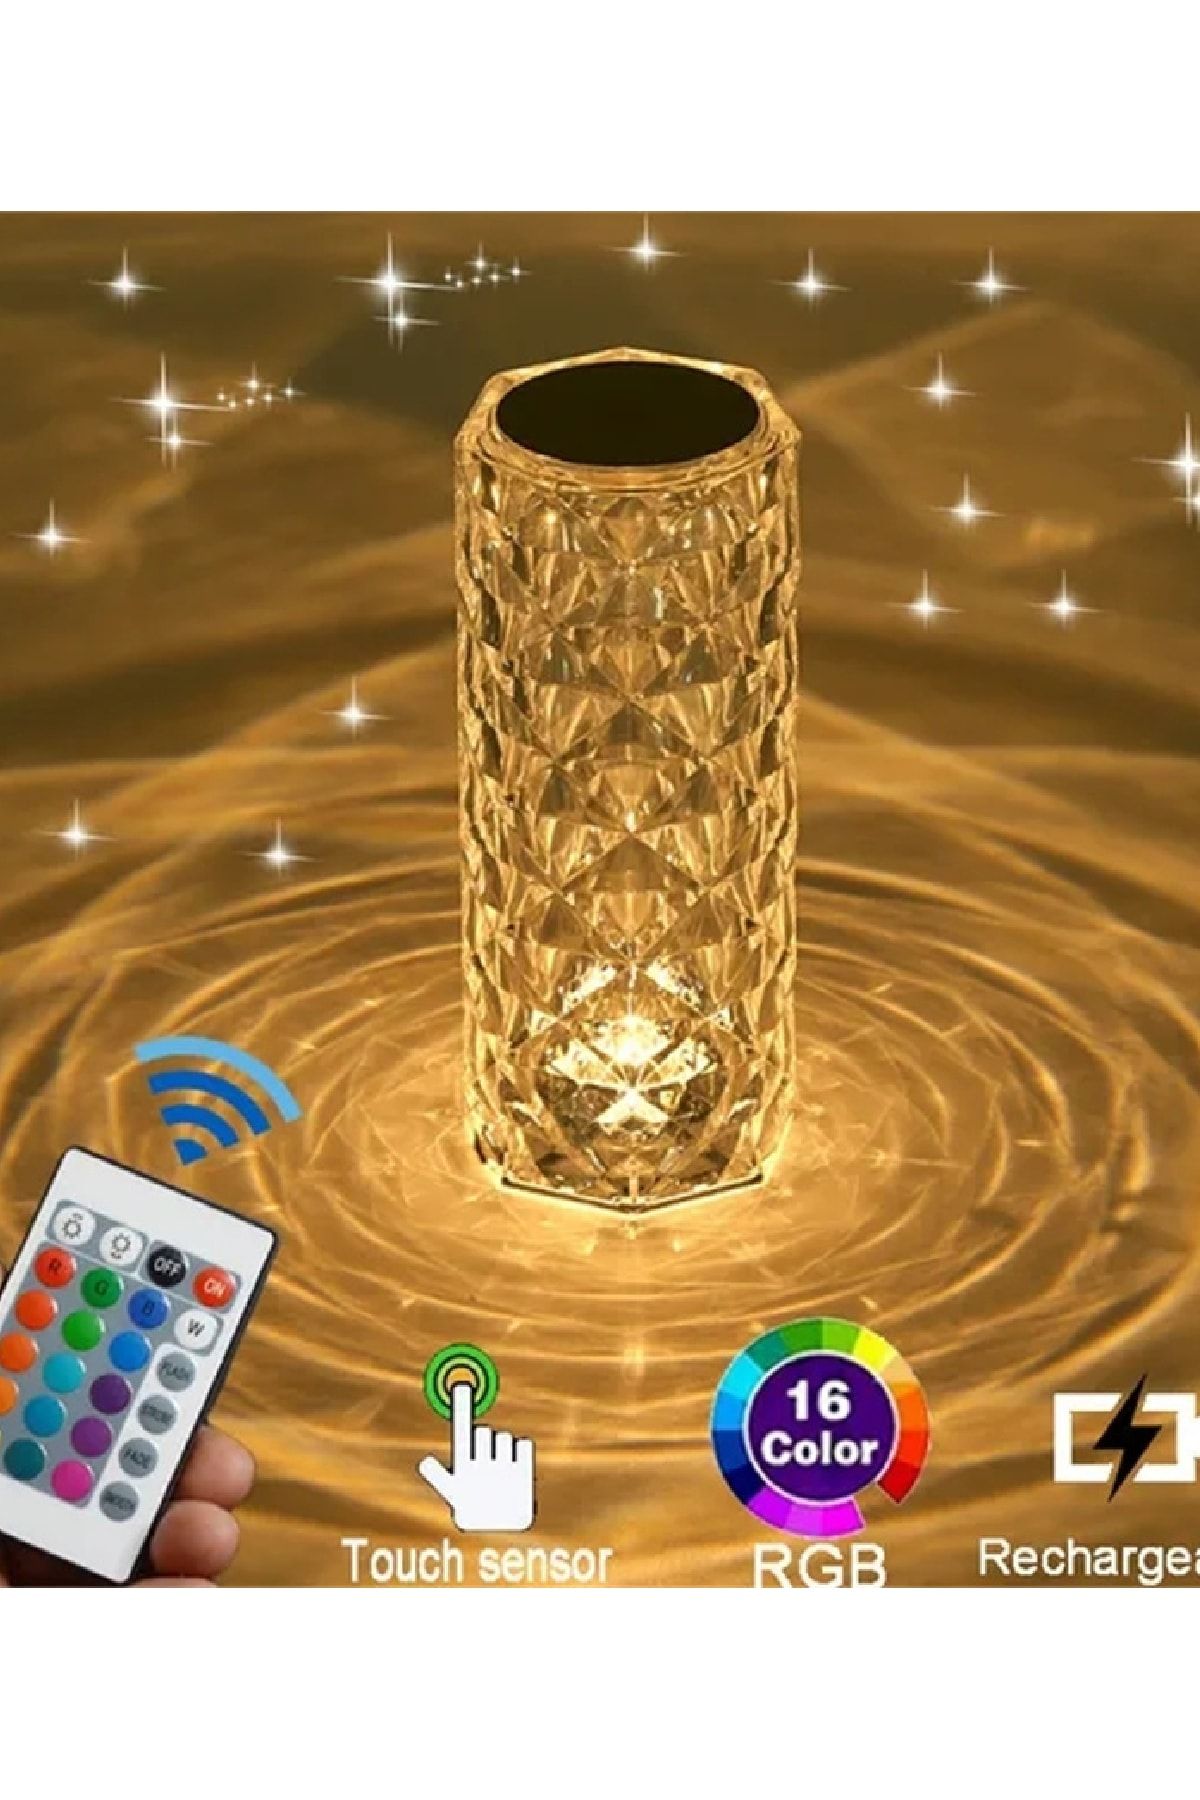 The Wlue Akrilik Şarjlı Kristal Led Masa Lambası 20 Mod Rgb Dokunmatik Ambians Dekor Gece Lambası